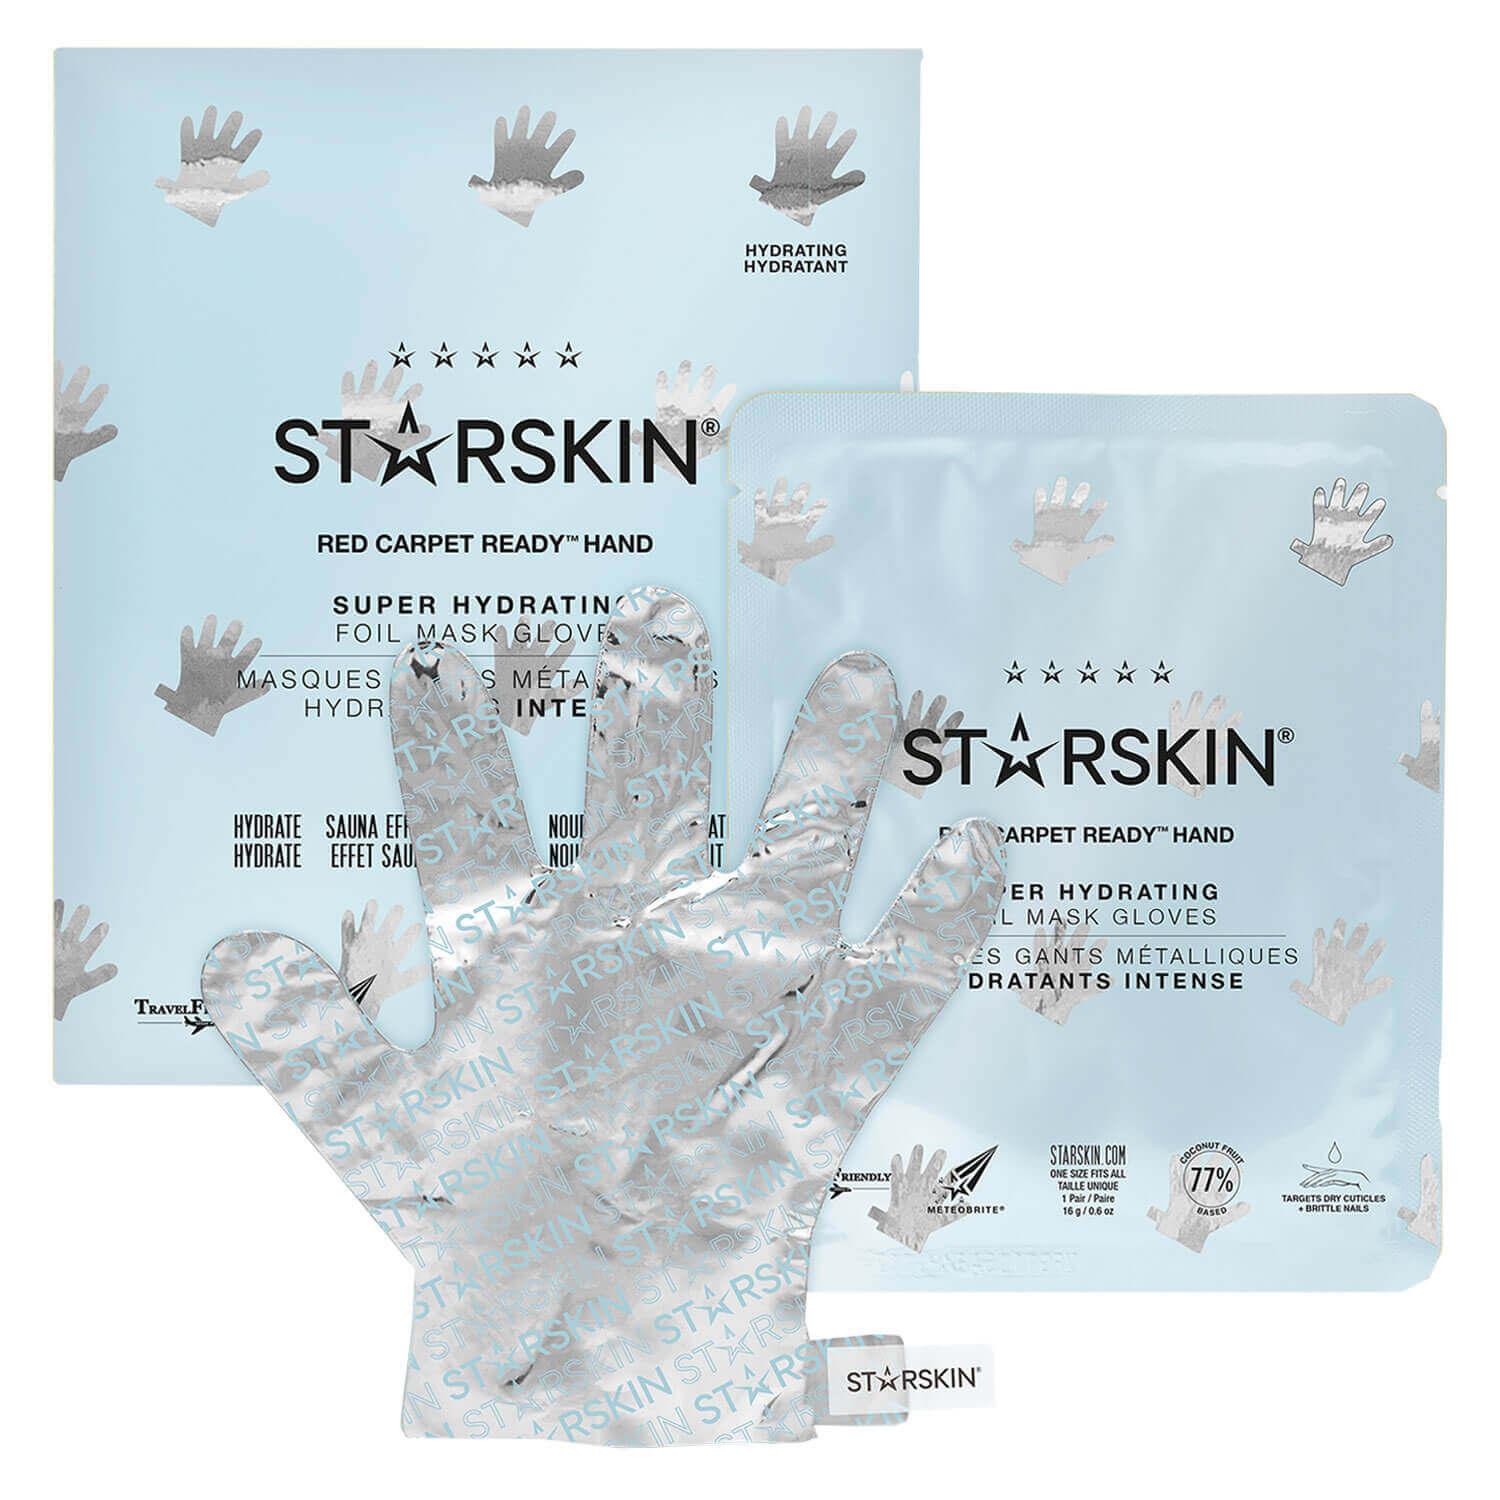 STARSKIN - Red Carpet Ready Hand Hydrating Hand Mask